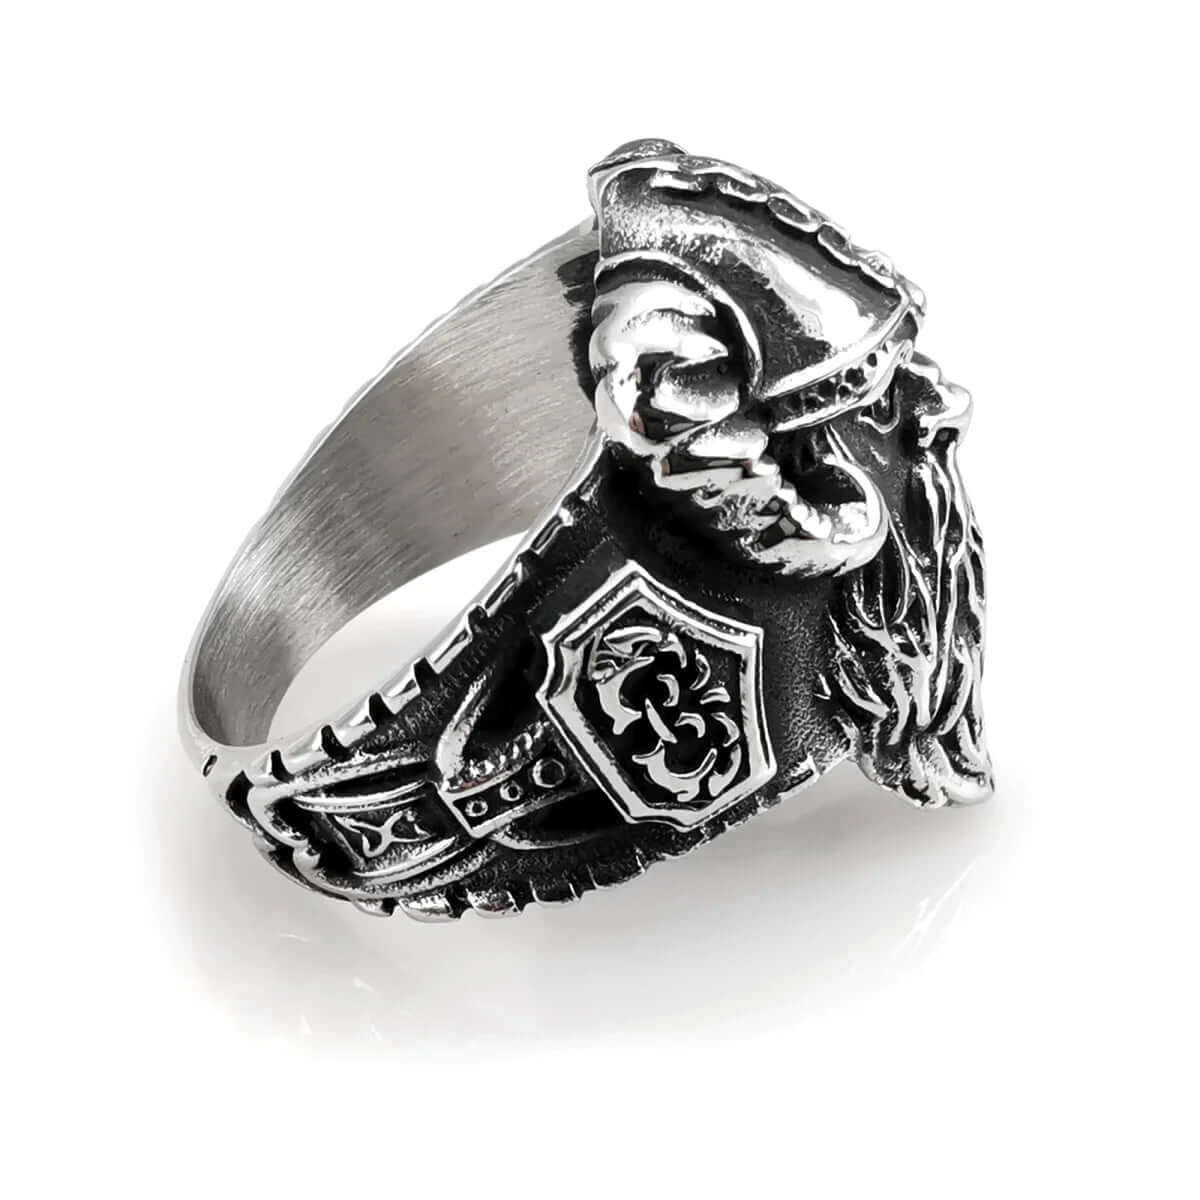 Berserker Thor's Head Ring